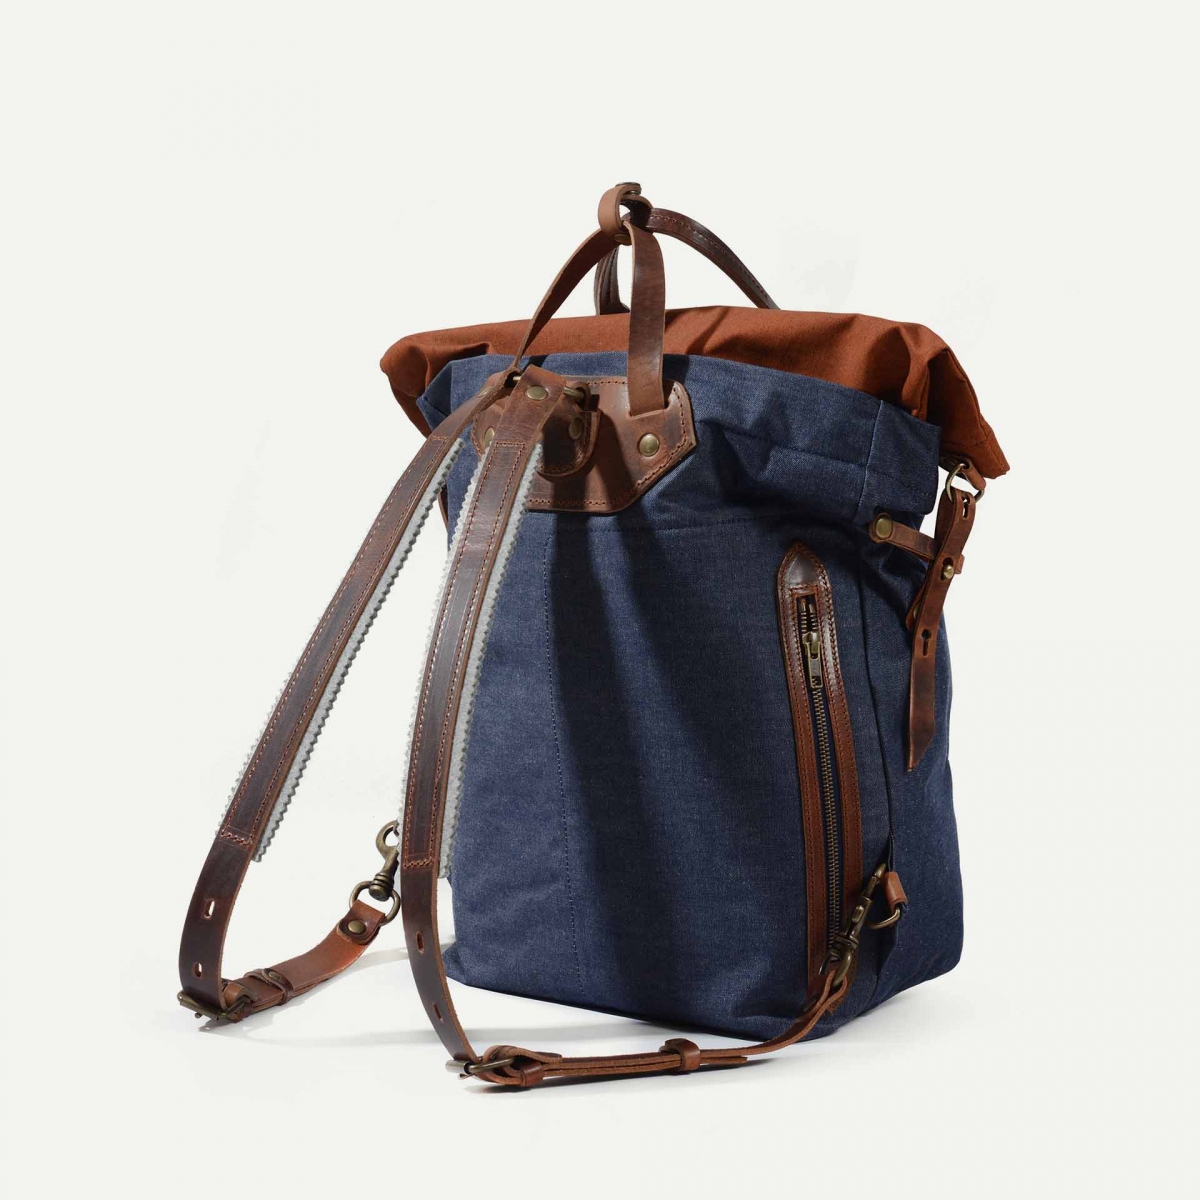 25L Woody backpack - Denim/Terra cotta (image n°3)